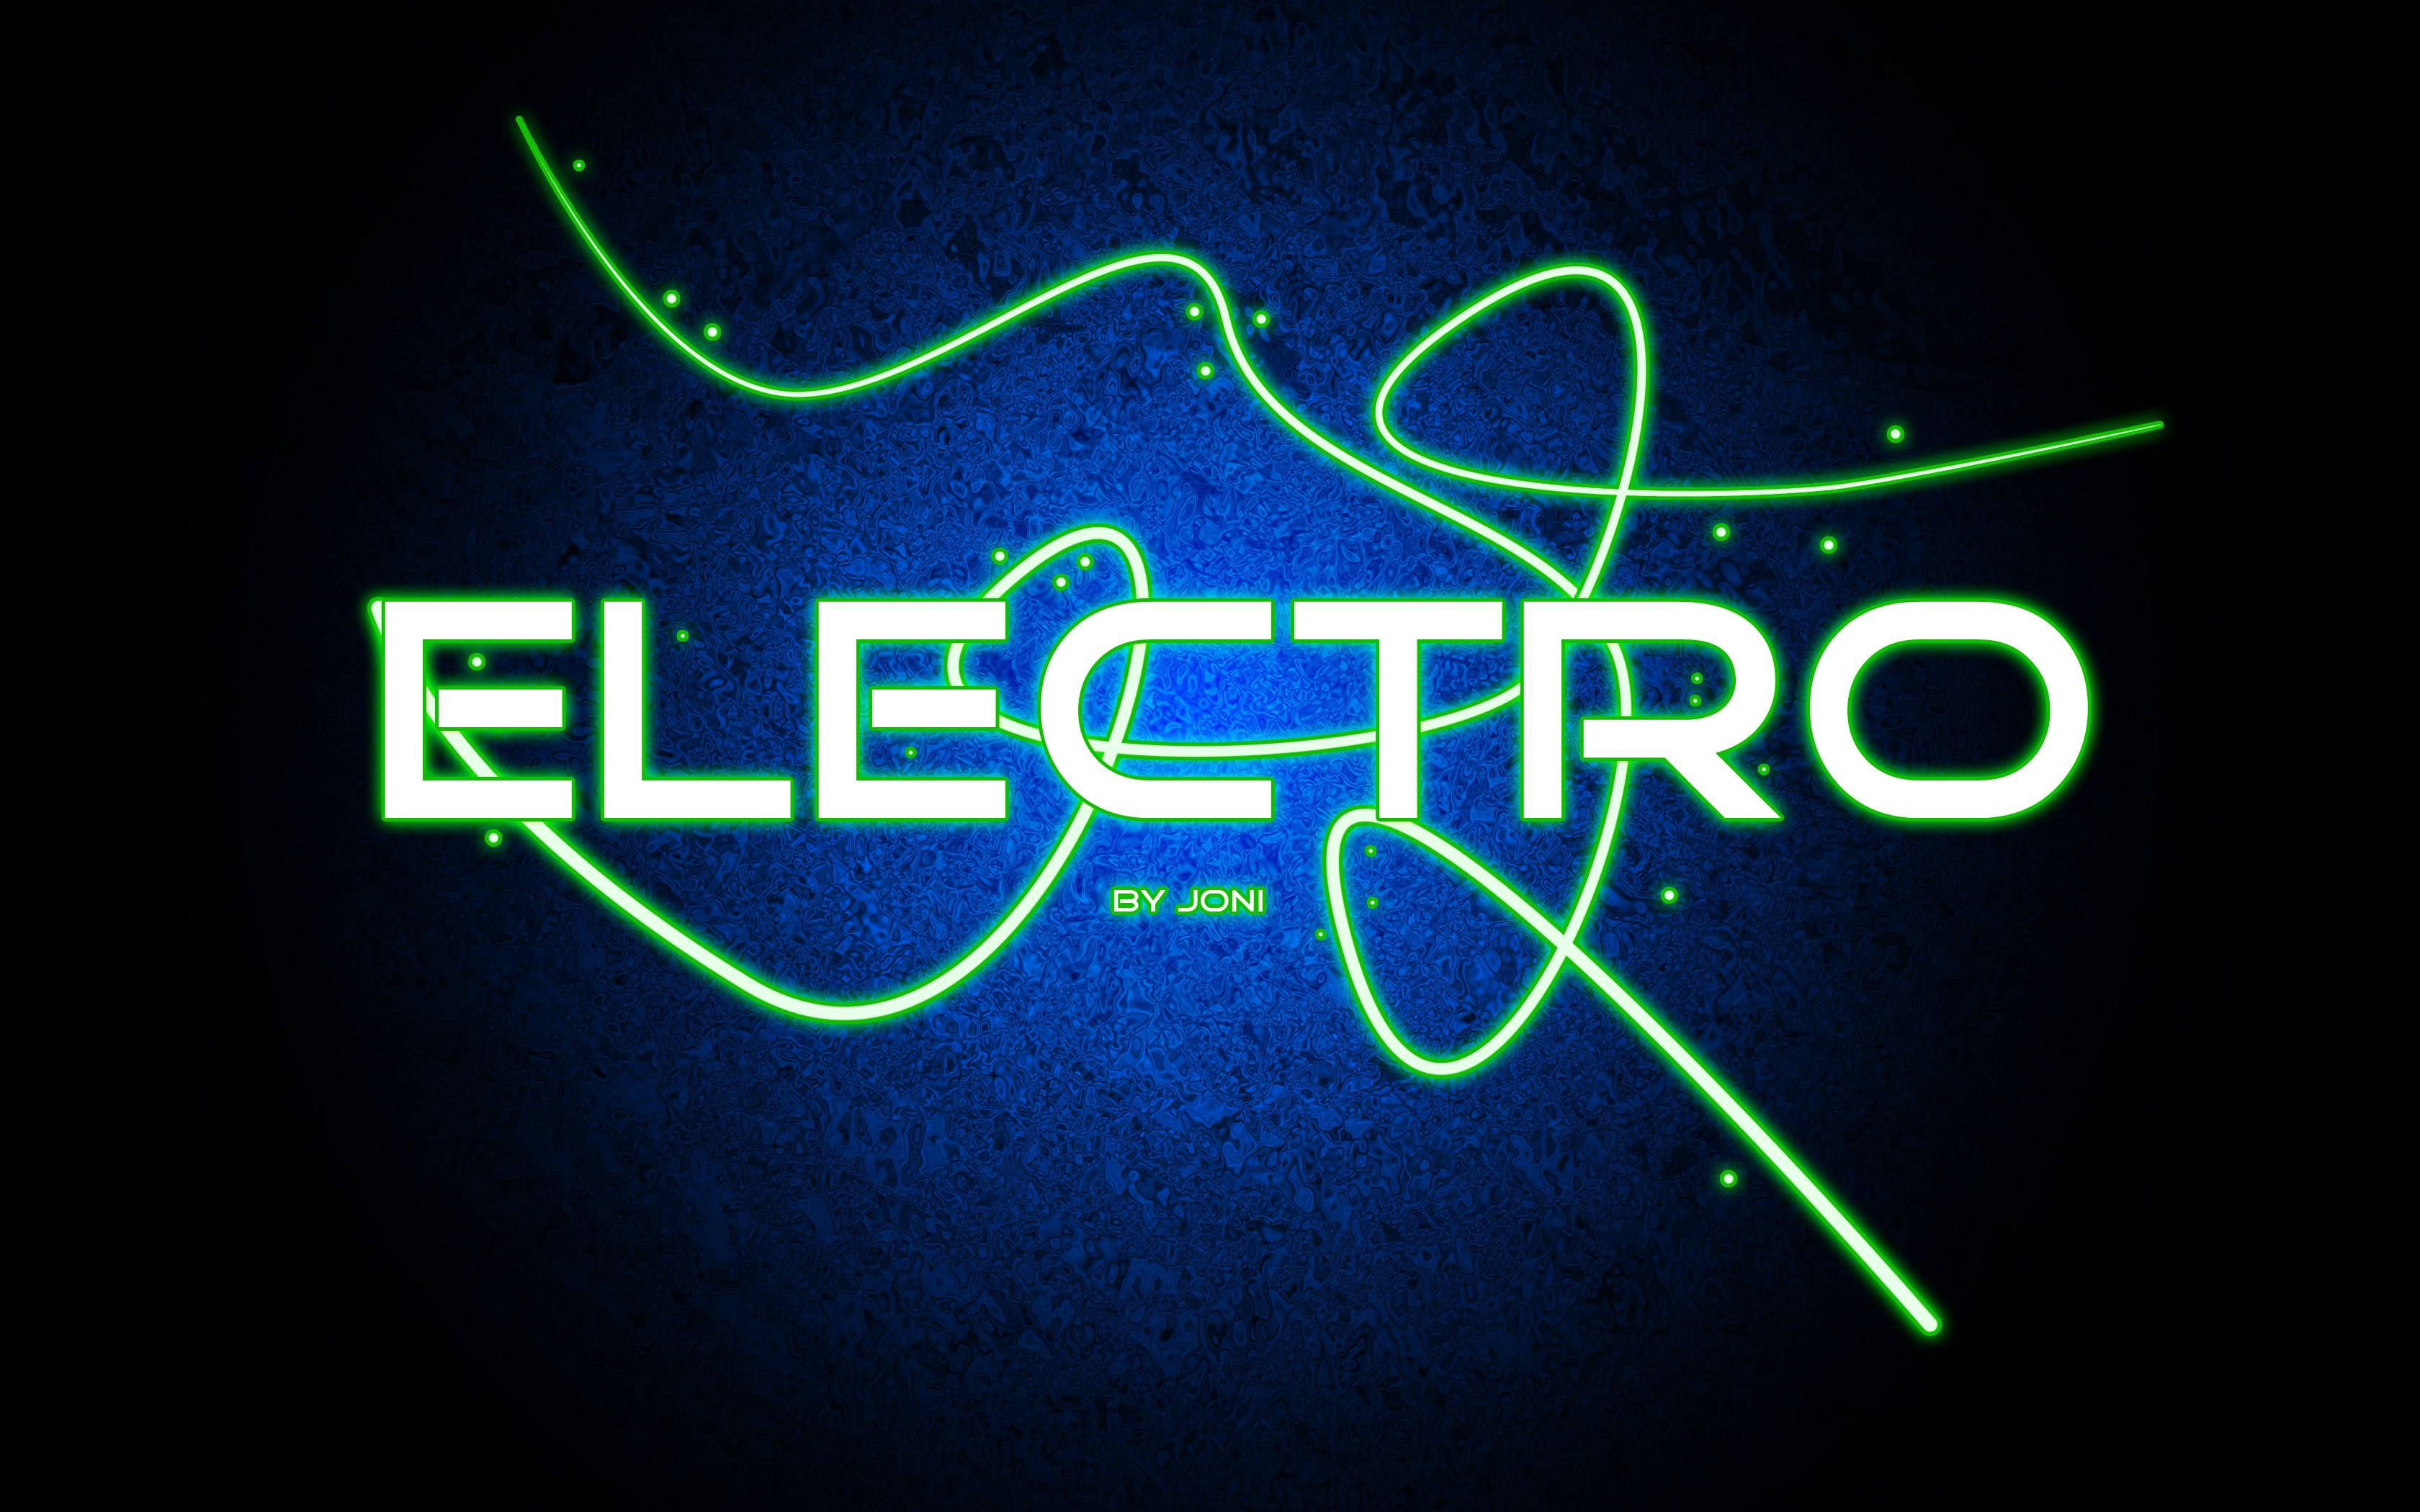 Electro House Music Wallpaper